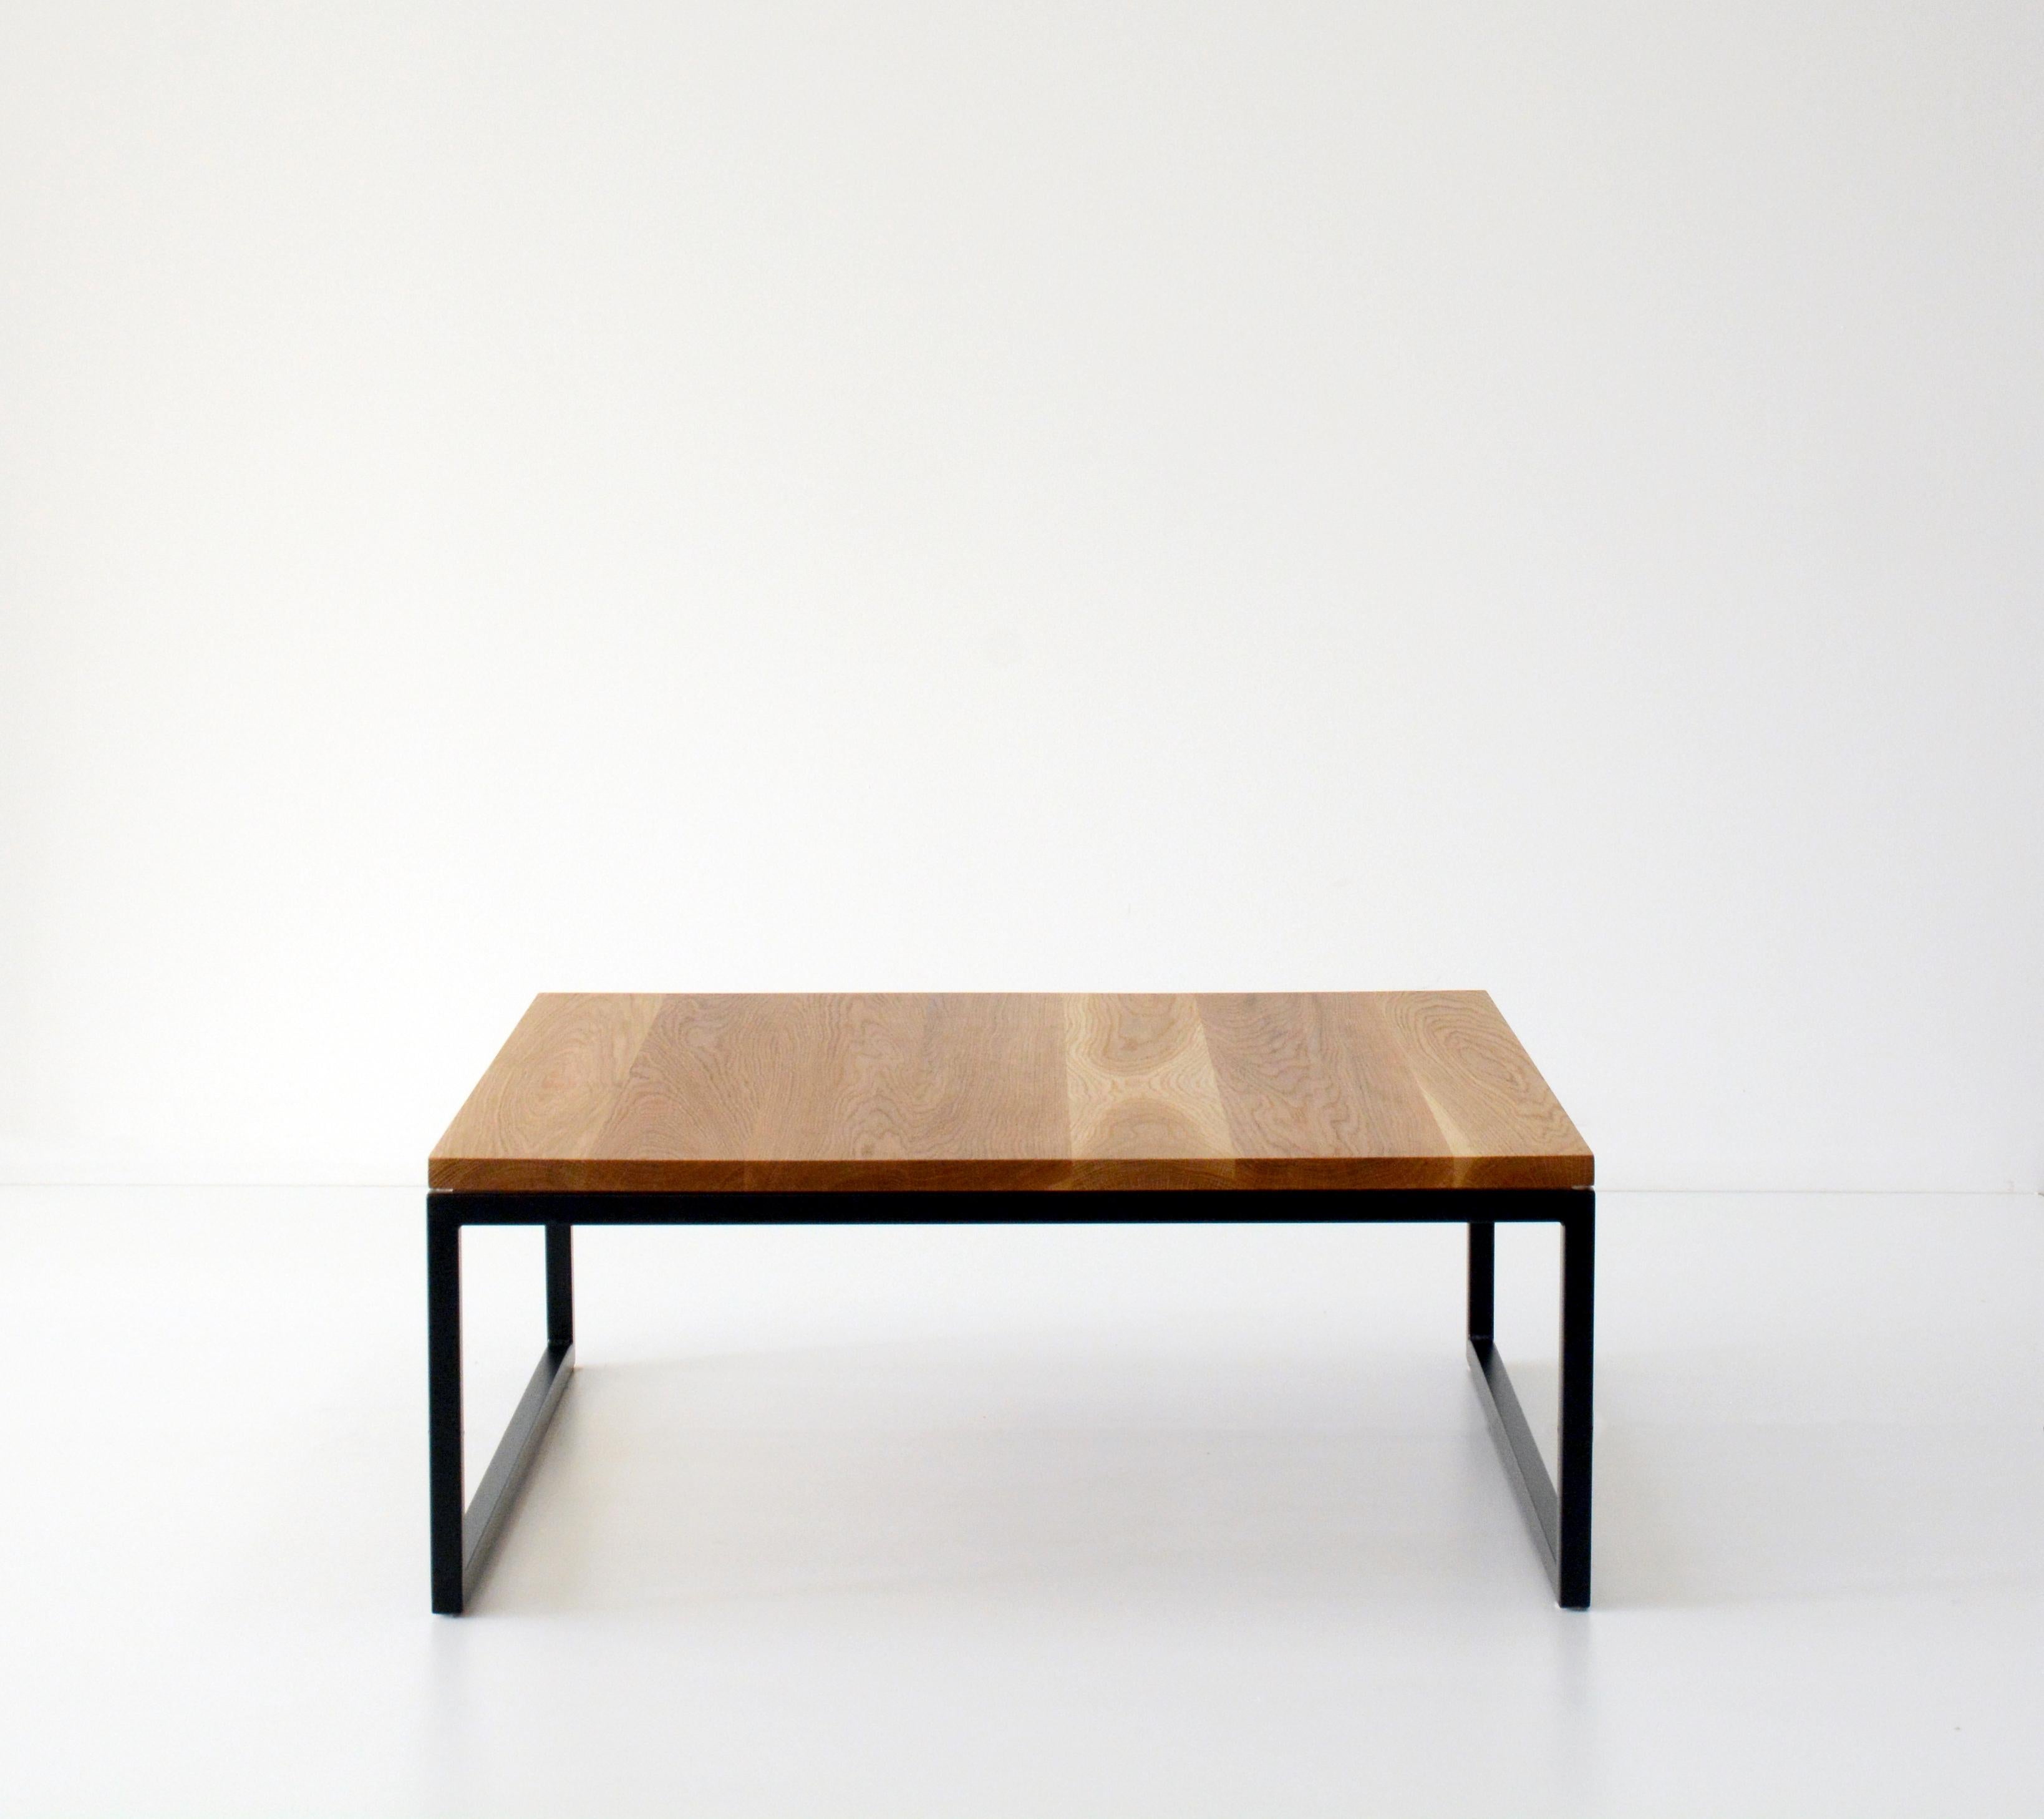 Oak large fort york coffee table by Hollis & Morris
Dimensions: 48